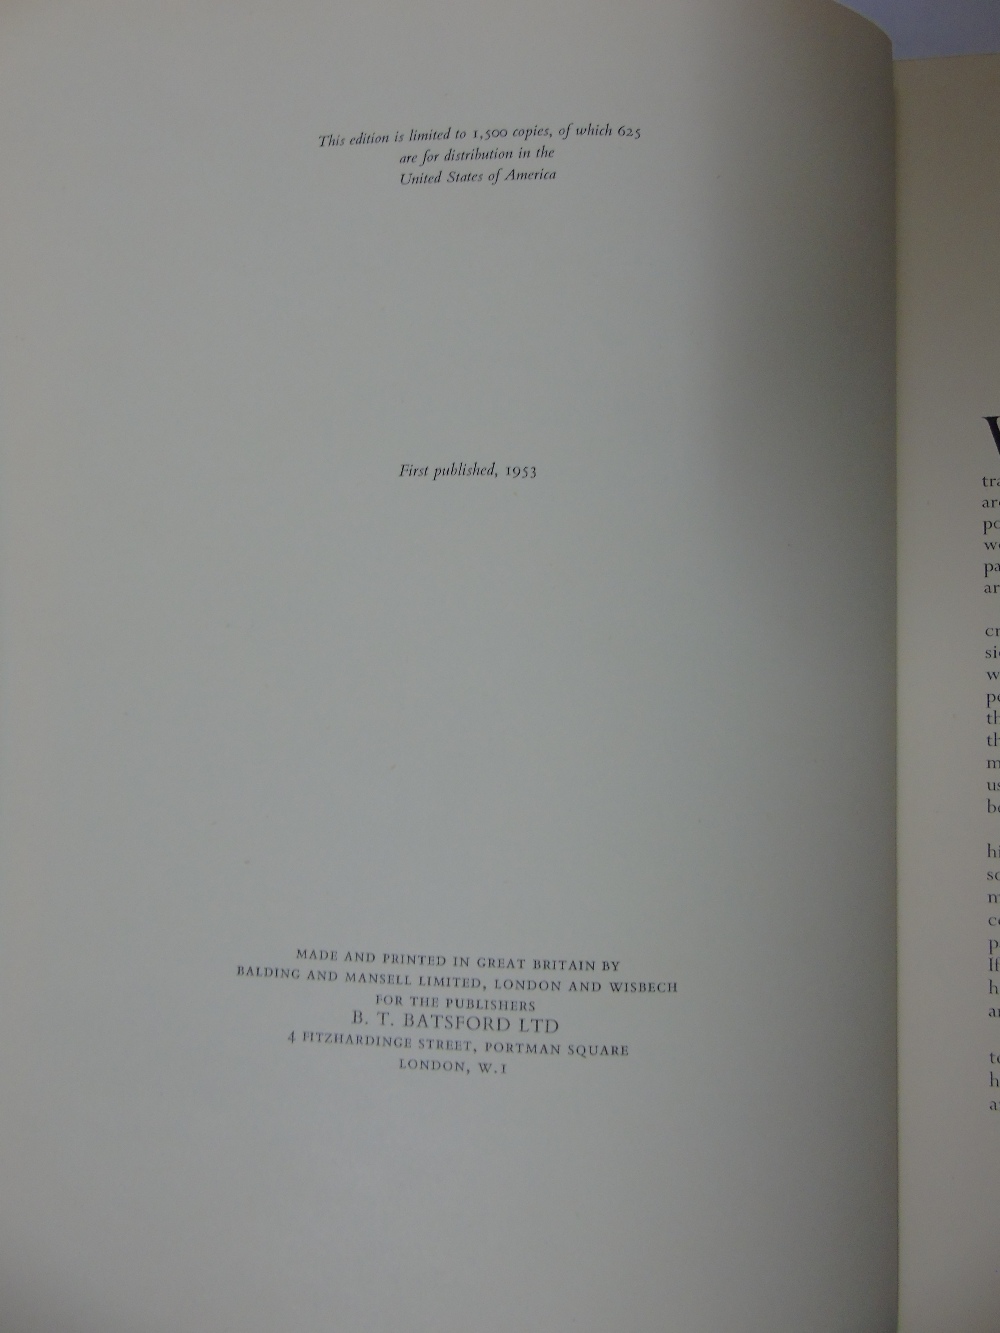 'WEDGWOOD' BY WOLF MANKOWITZ, 1953 LTD EDITION 625/1500 + 2 OTHER BOOKS REGARDING WEDGWOOD - Image 2 of 2